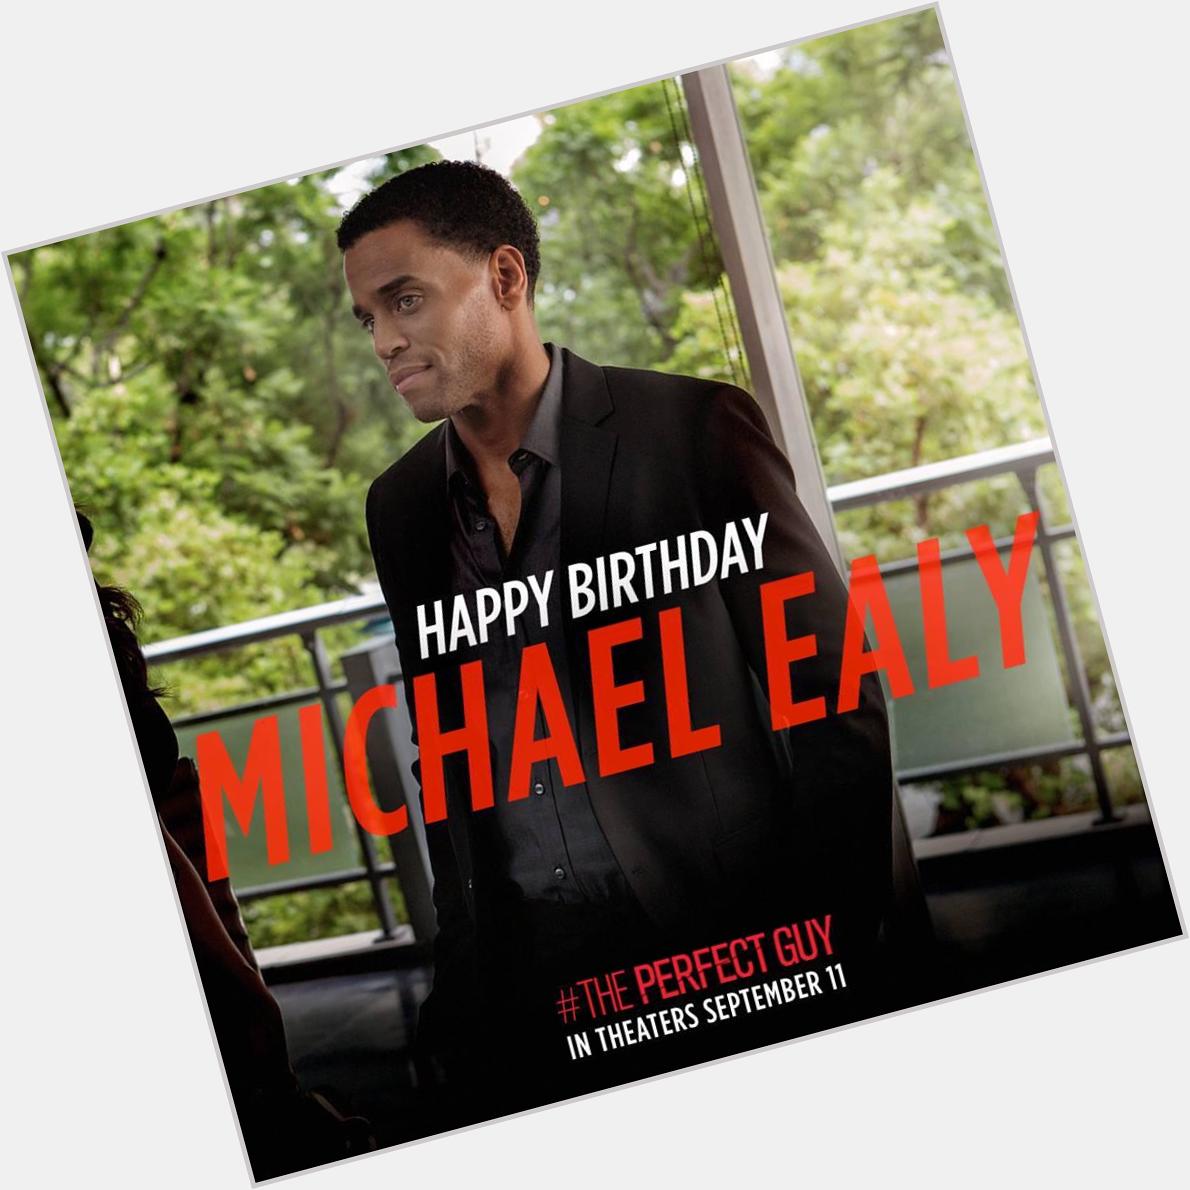 Happy Birthday Michael Ealy!   